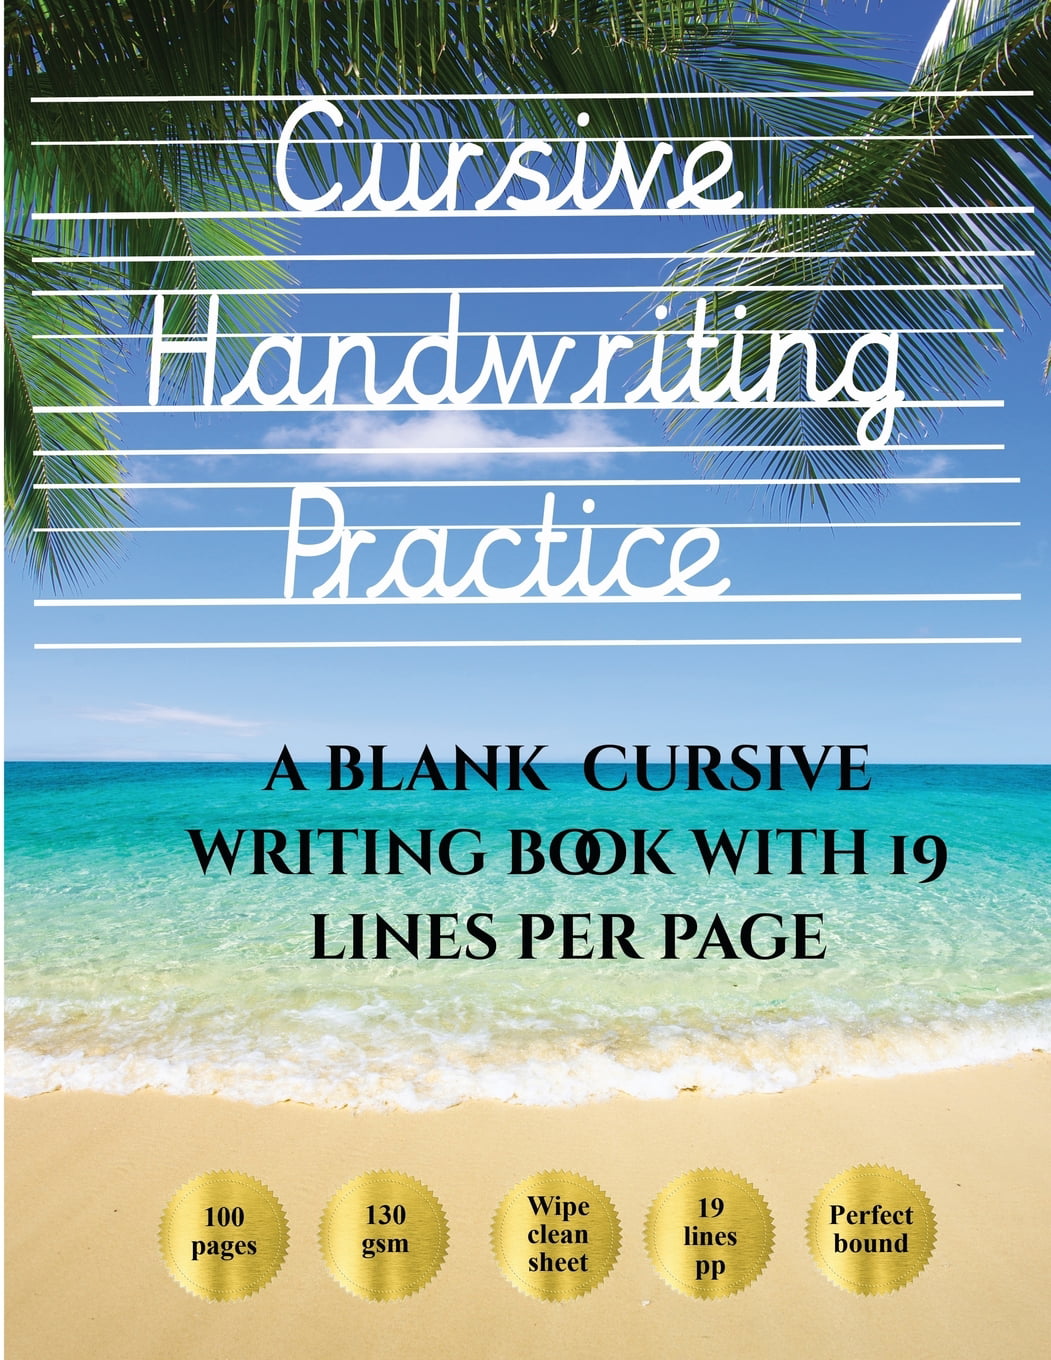 Cursive writing book images - ultralonestar